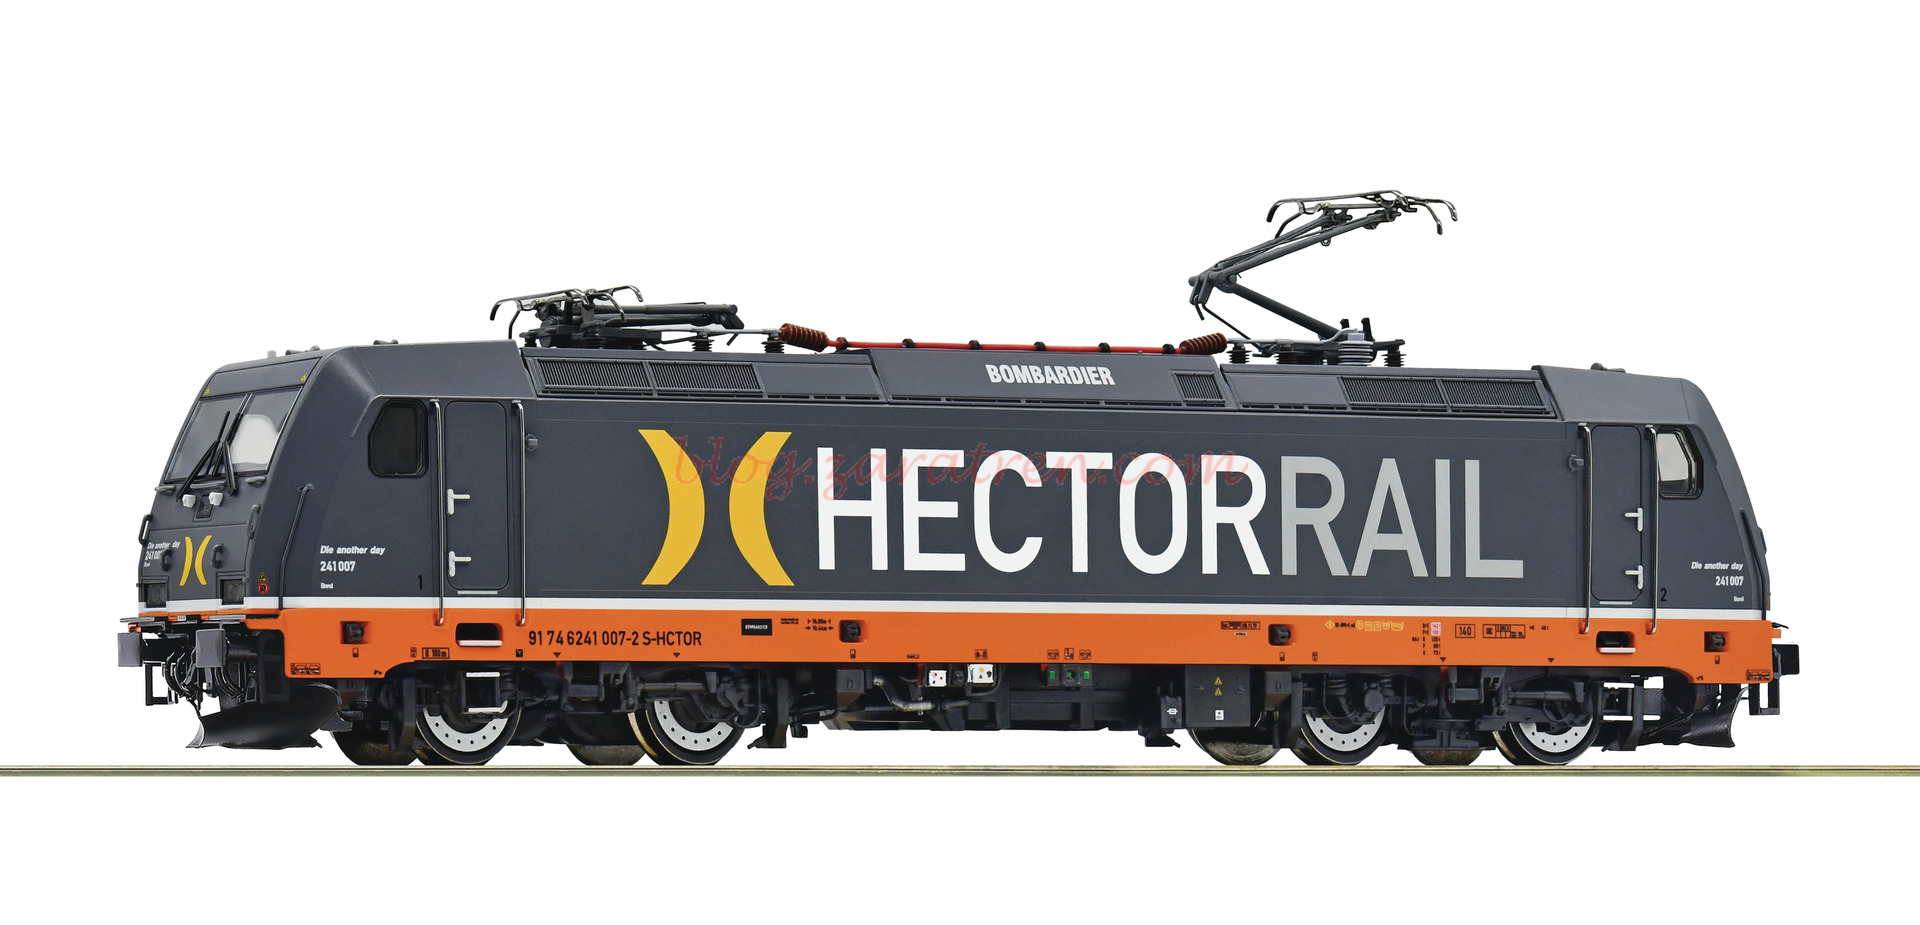 Roco – Máquina Electrica 241 007-2, Hector Rail, Analogica, Escala H0. Ref: 73947.